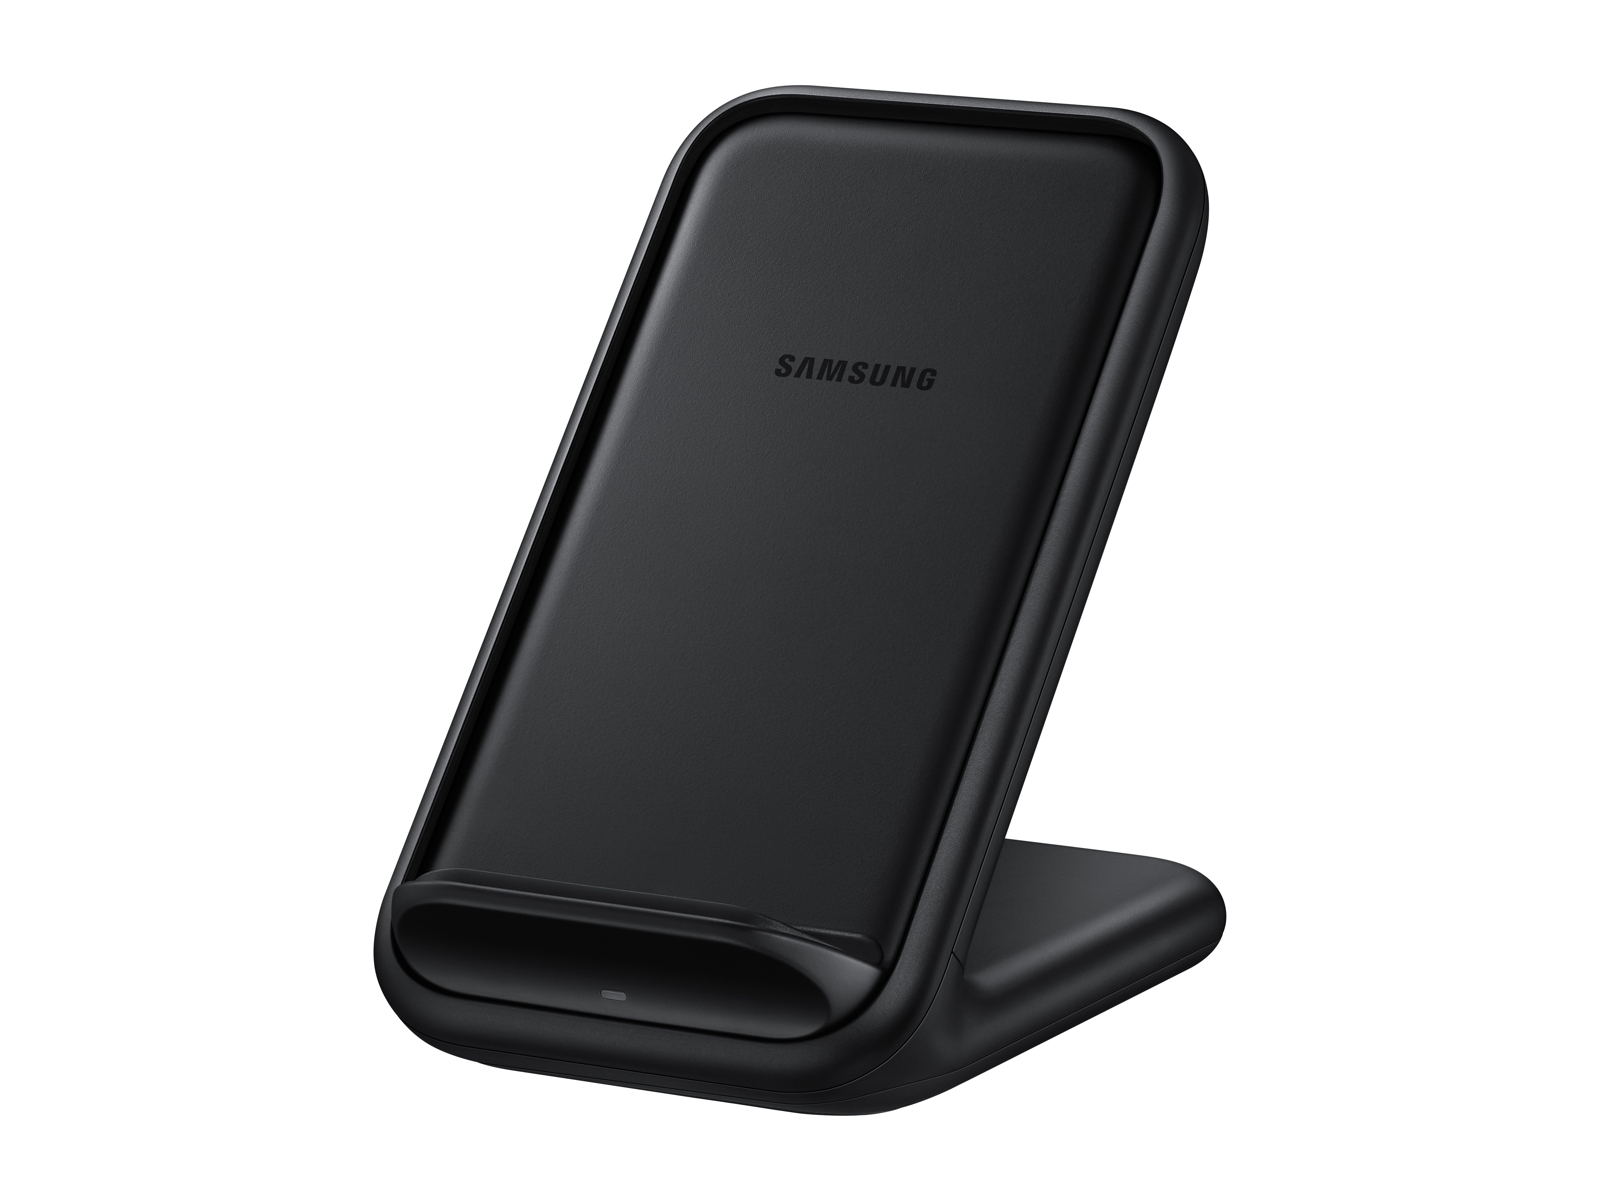 kontakt Forbipasserende yderligere EP-N5200TBEGUS | Wireless Charger Stand 15W Black | Samsung Business US